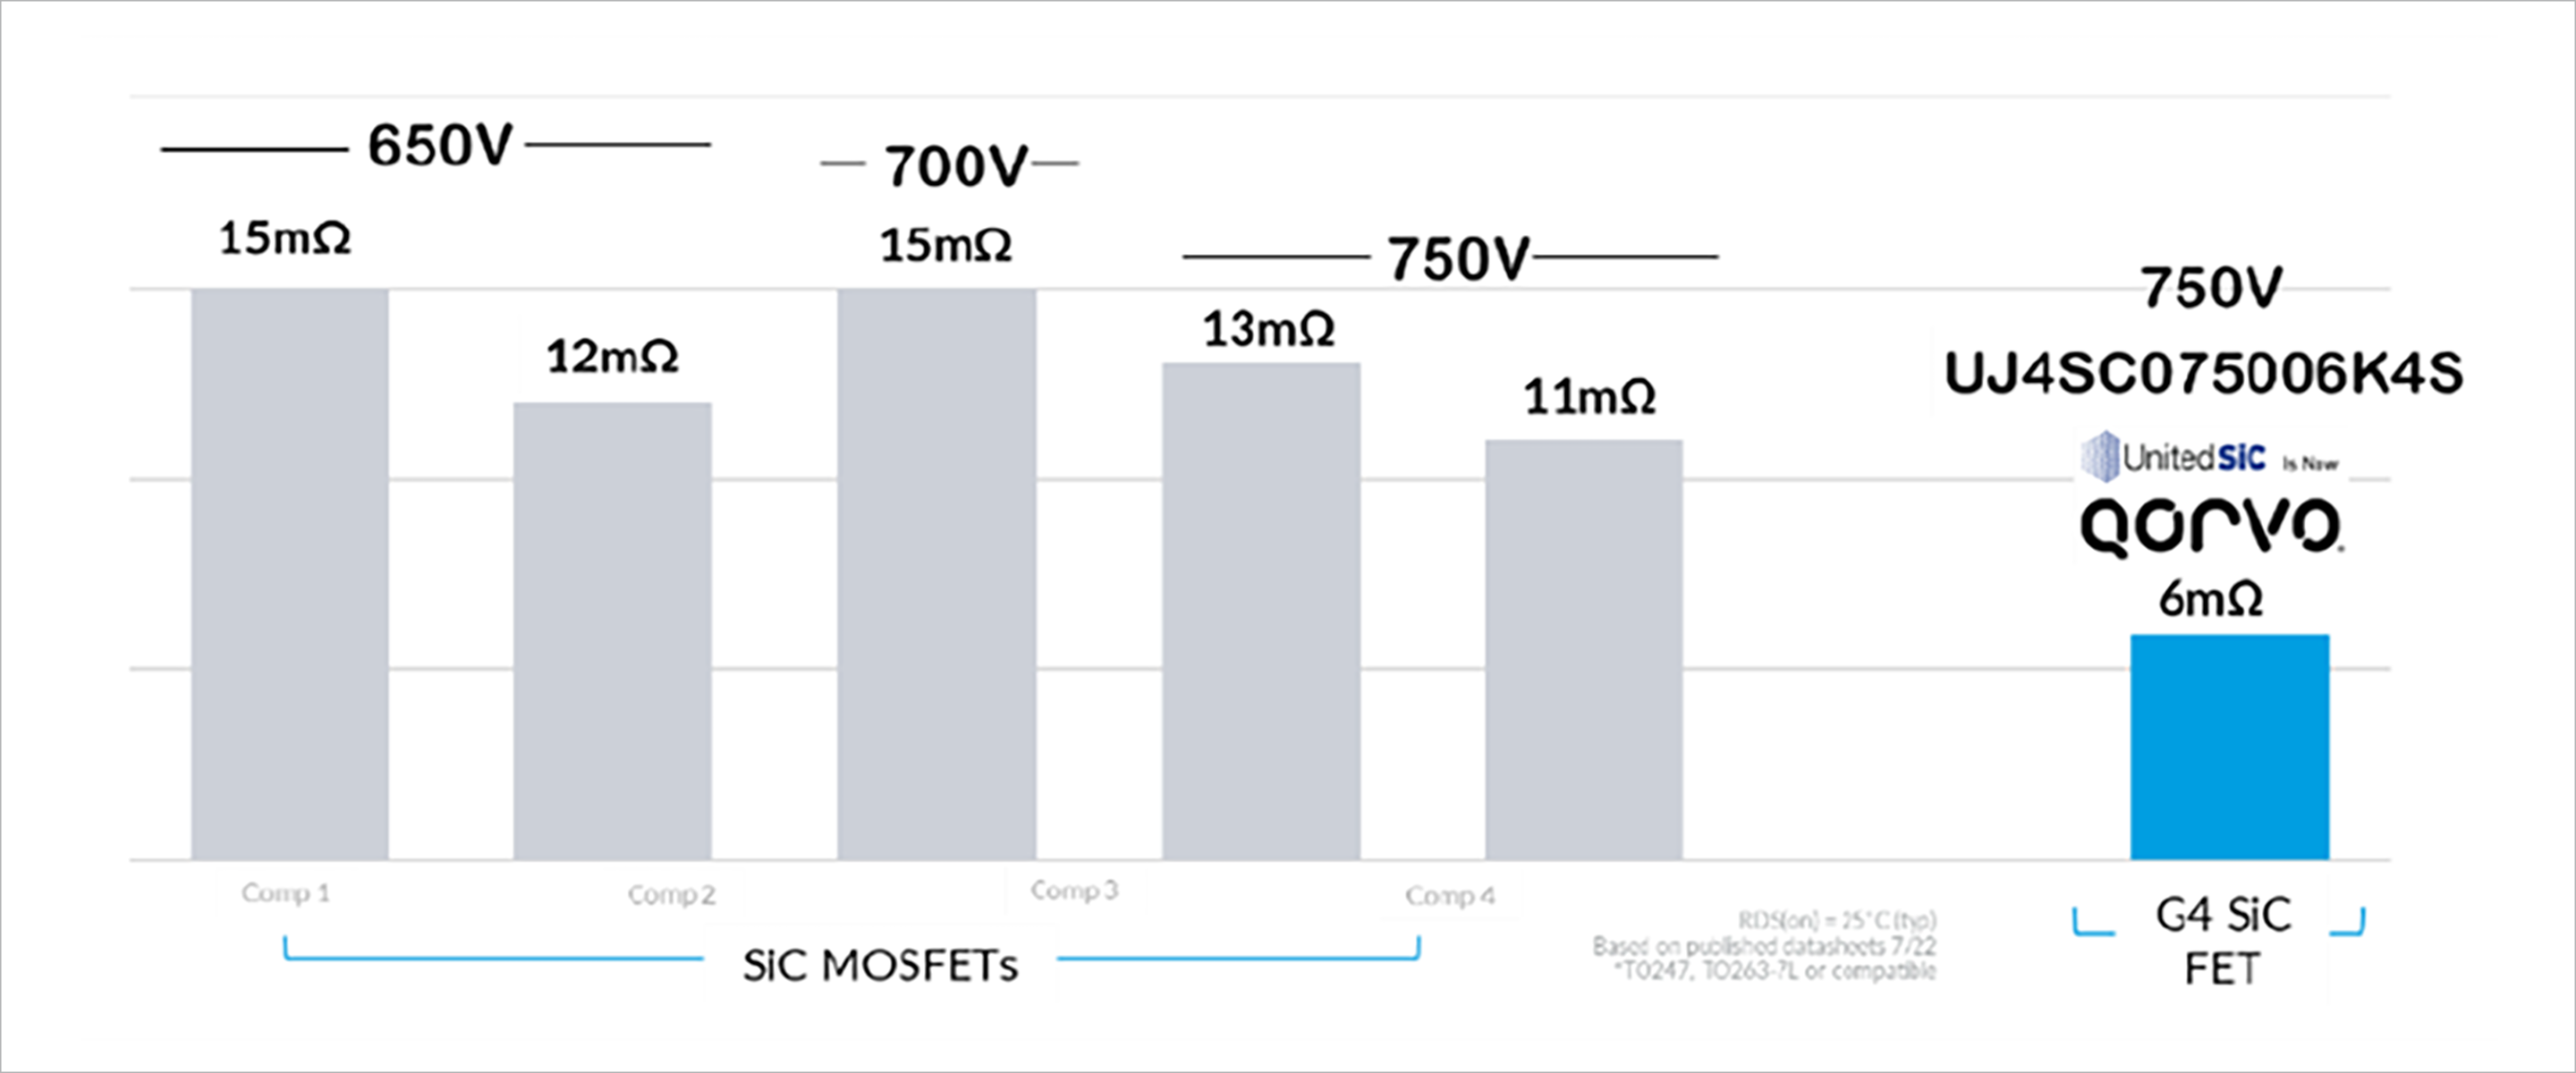 Figure 4: 750V Gen4 Qorvo SiCFET low on-resistance UJ4SC075006K4S compared to similar 650V-750V class competitive SiC MOSFETs